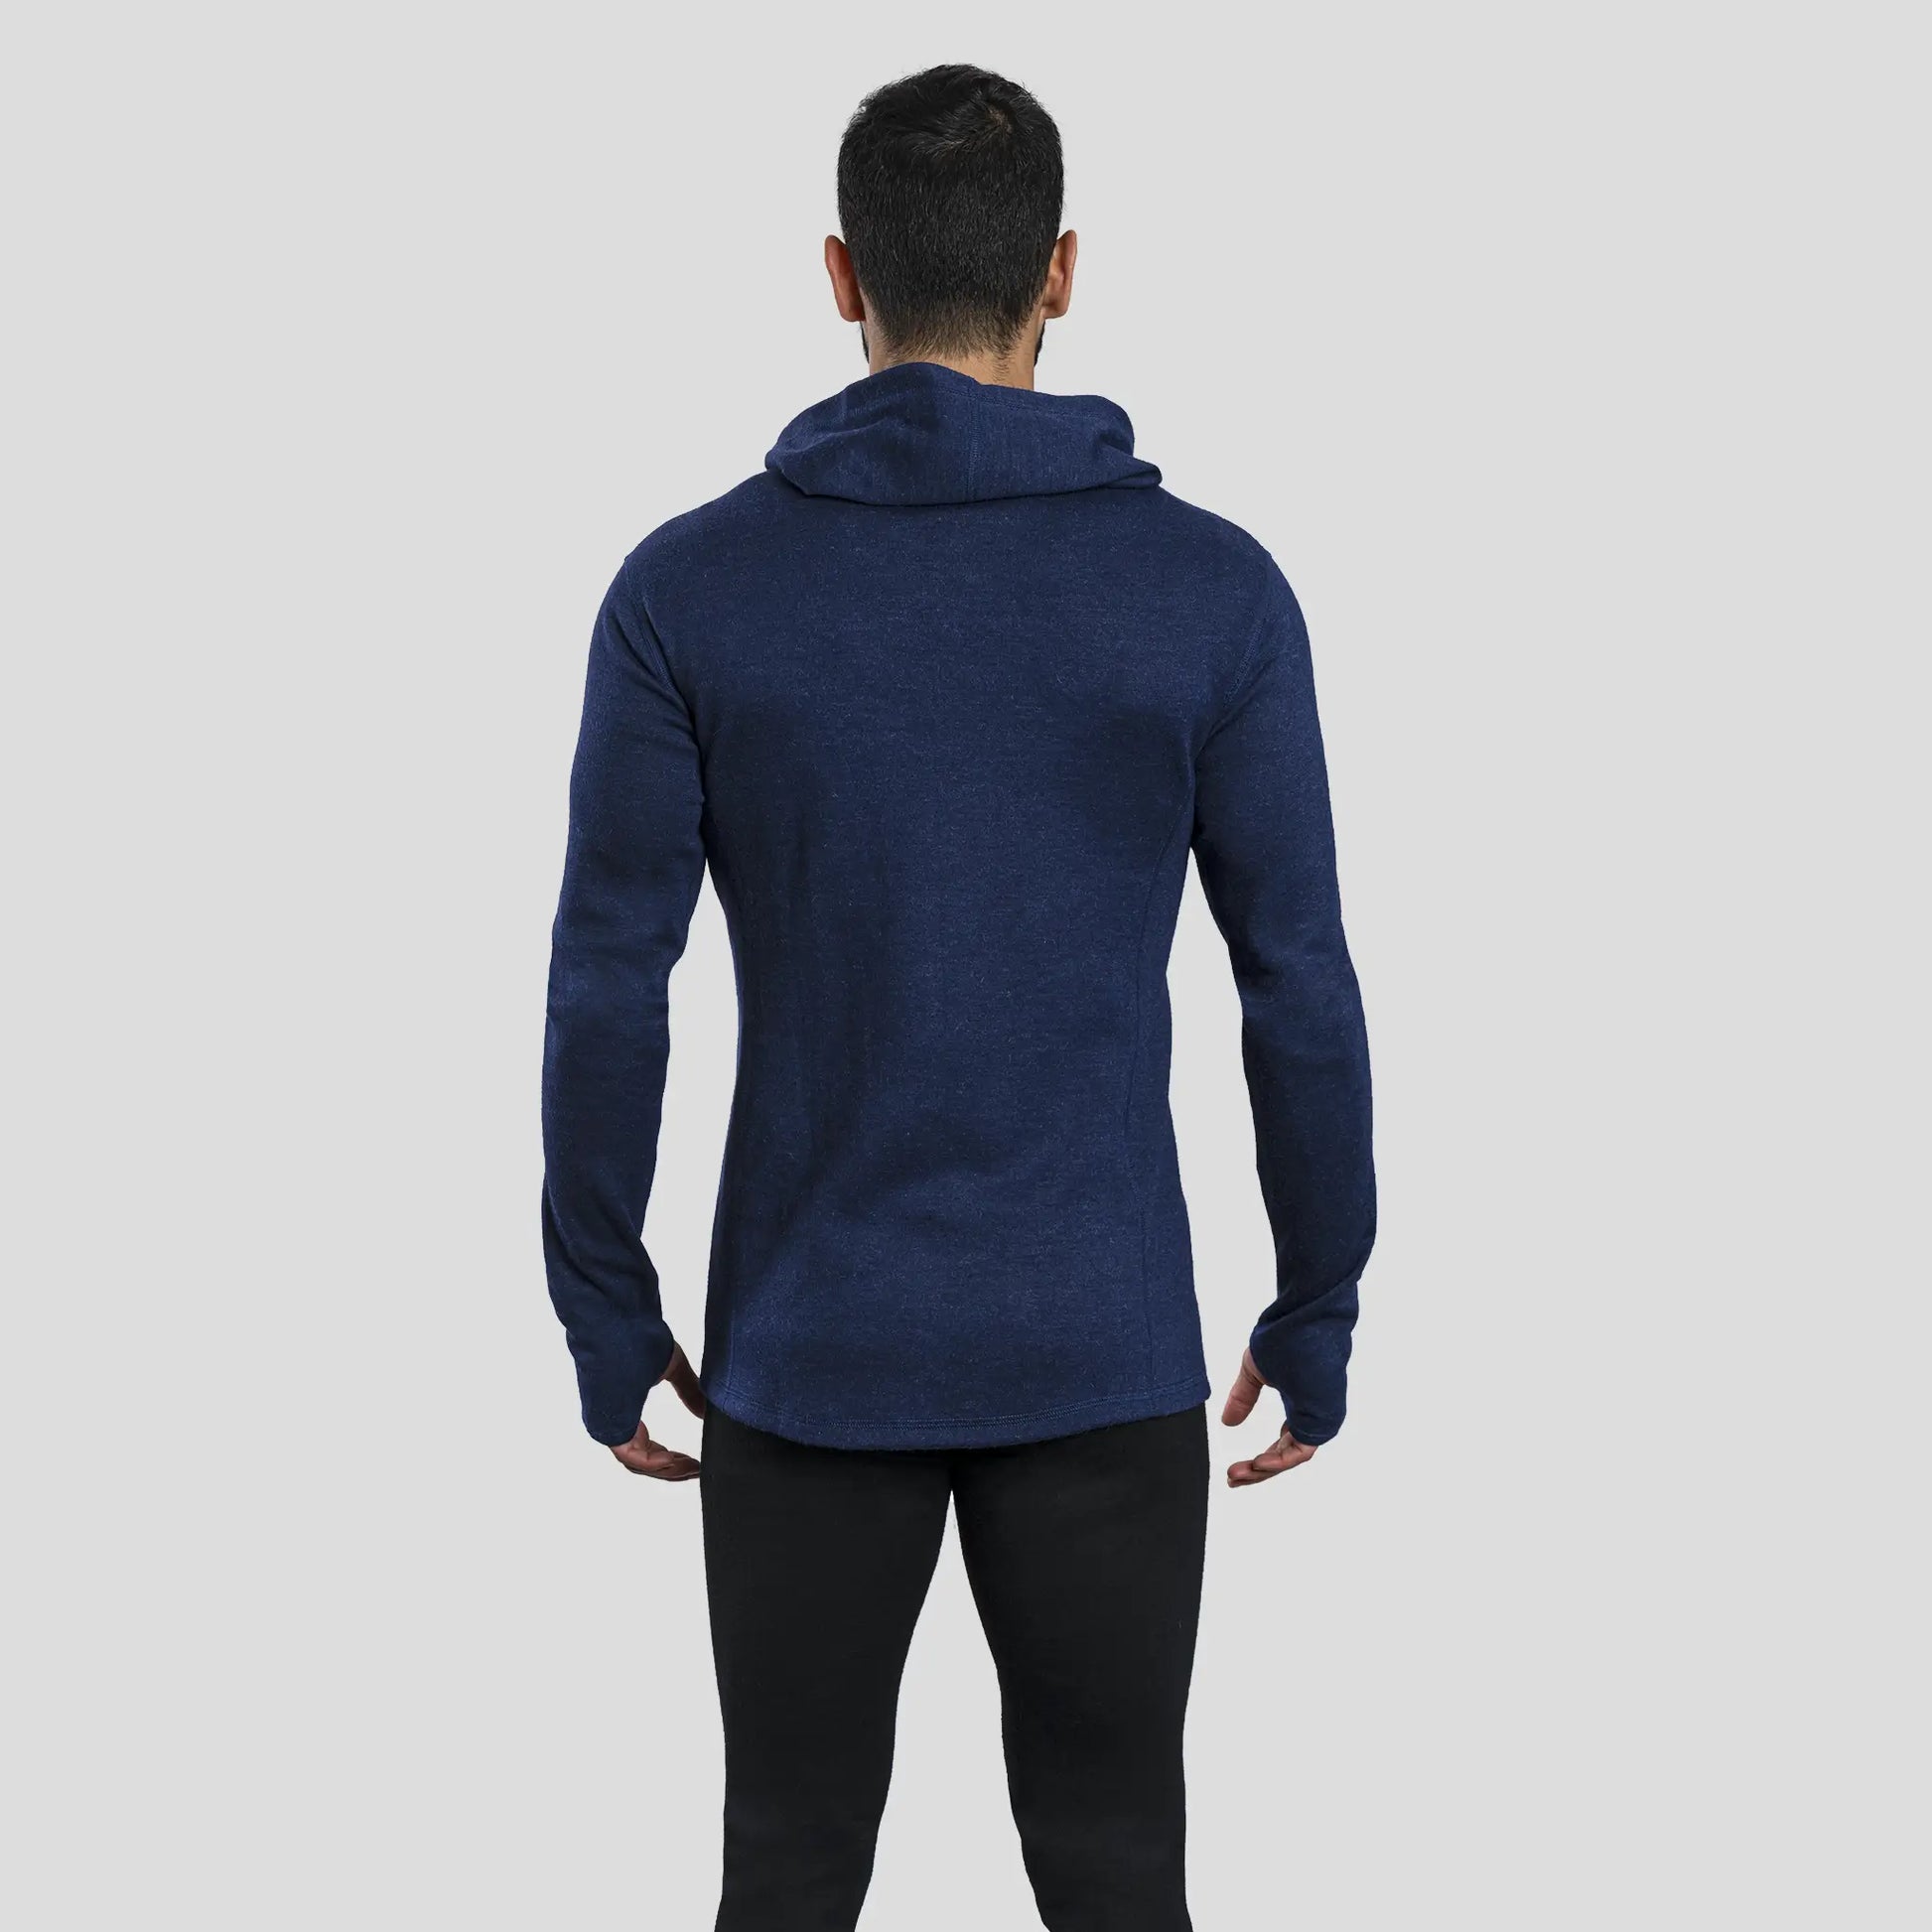 mens most comfortable hoodie jacket full zip color navy blue